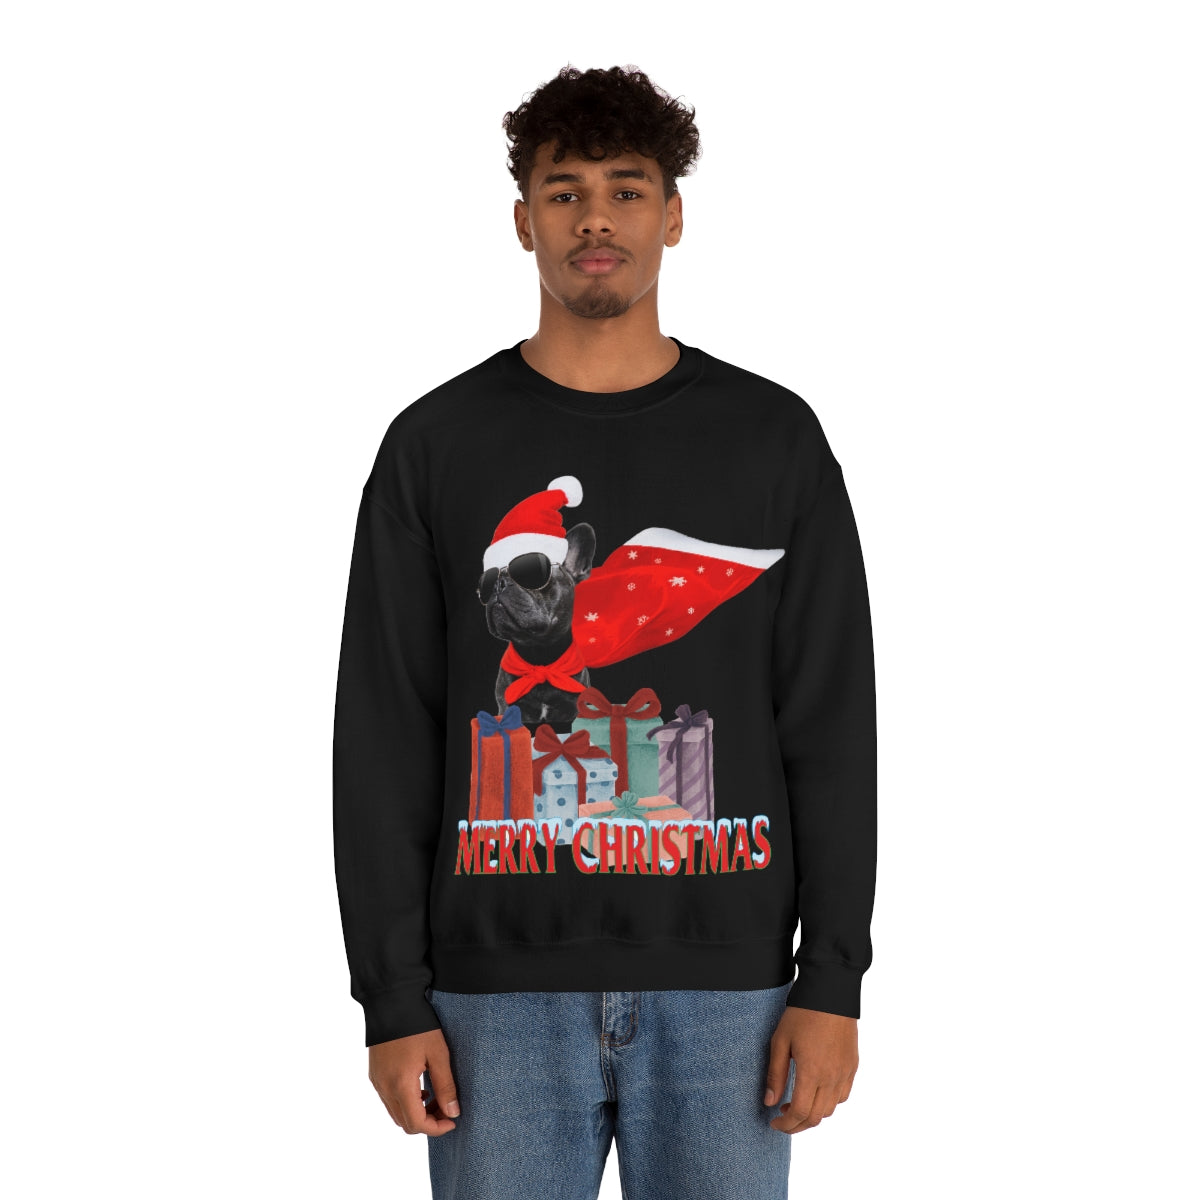 French Bulldog Christmas Sweater - Santaland